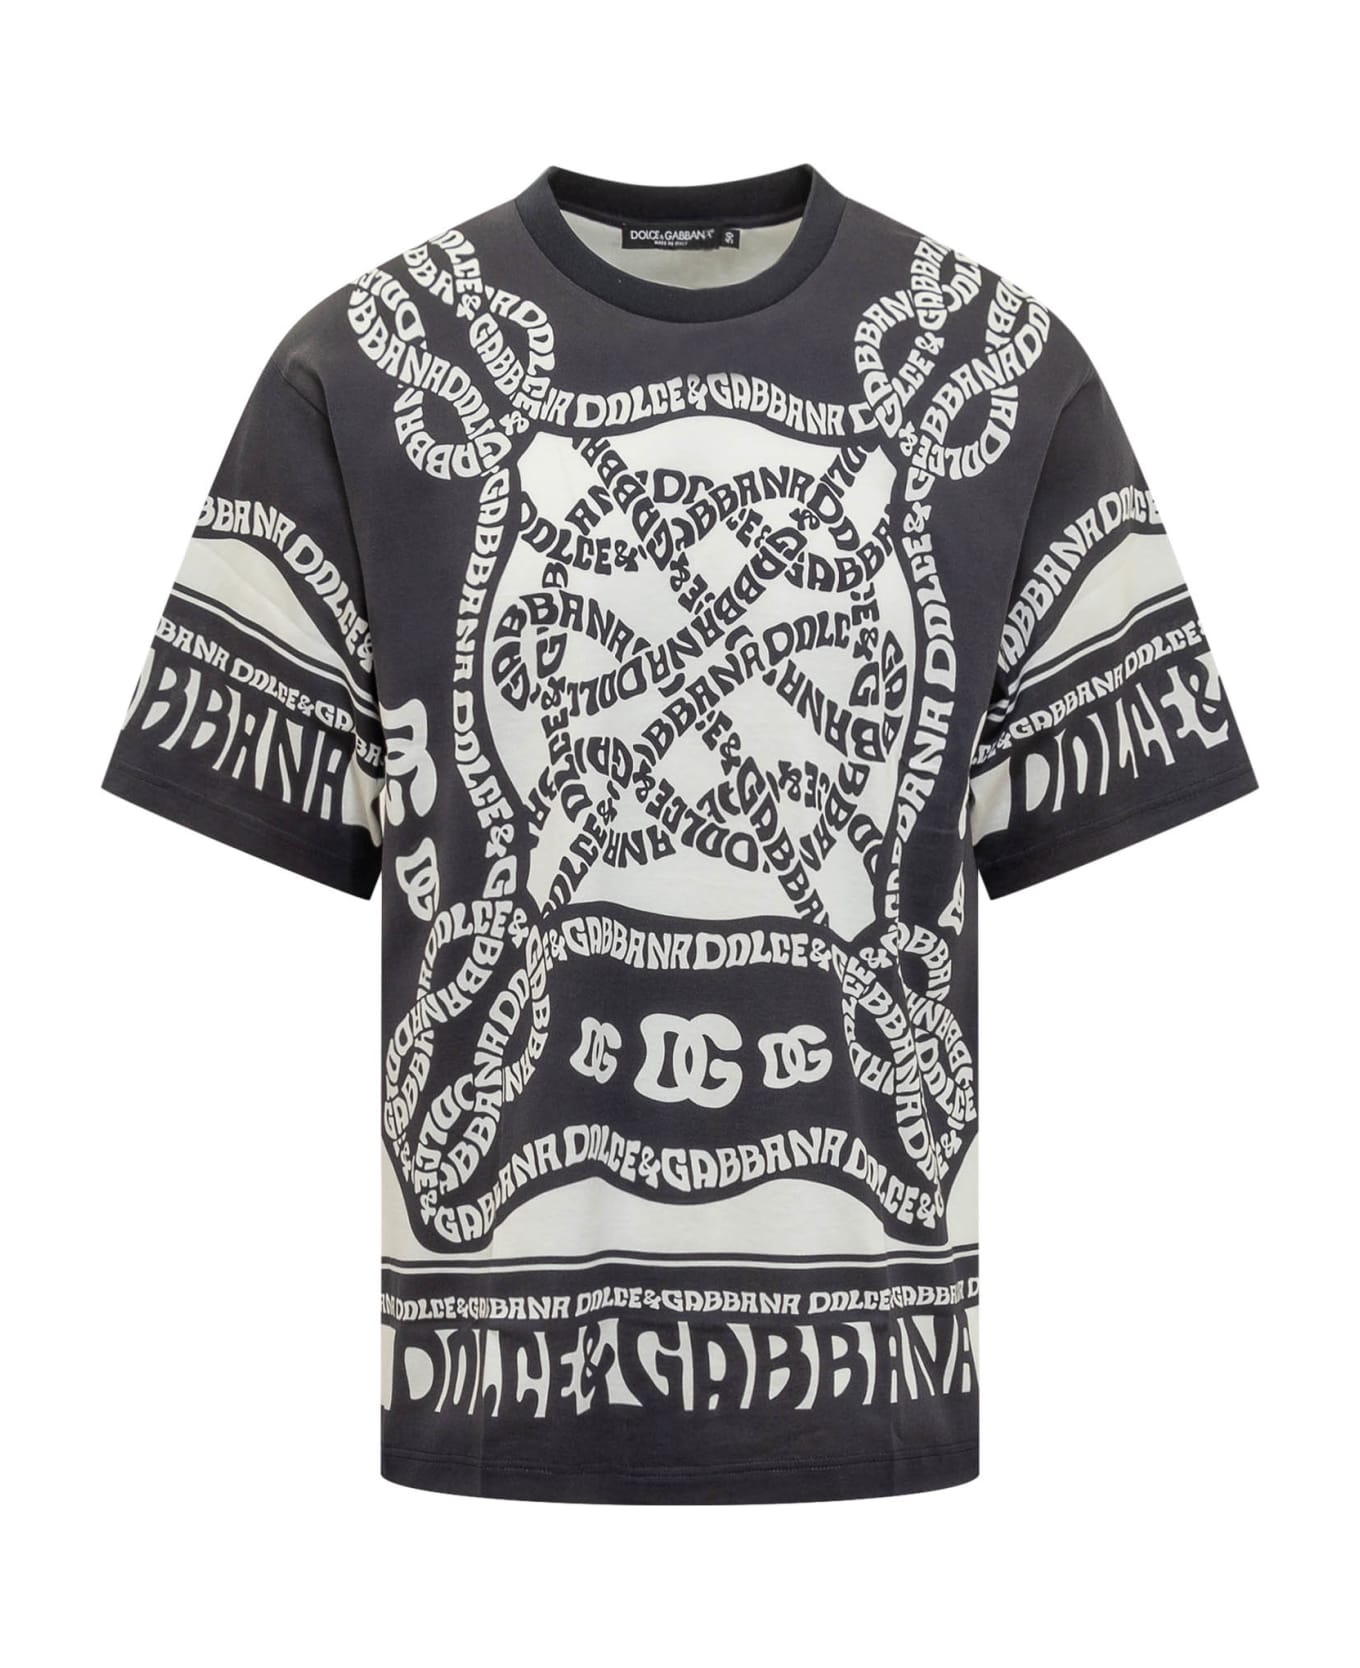 Dolce & Gabbana Marina T-shirt - DG MARINA FDO BCO NATURALE